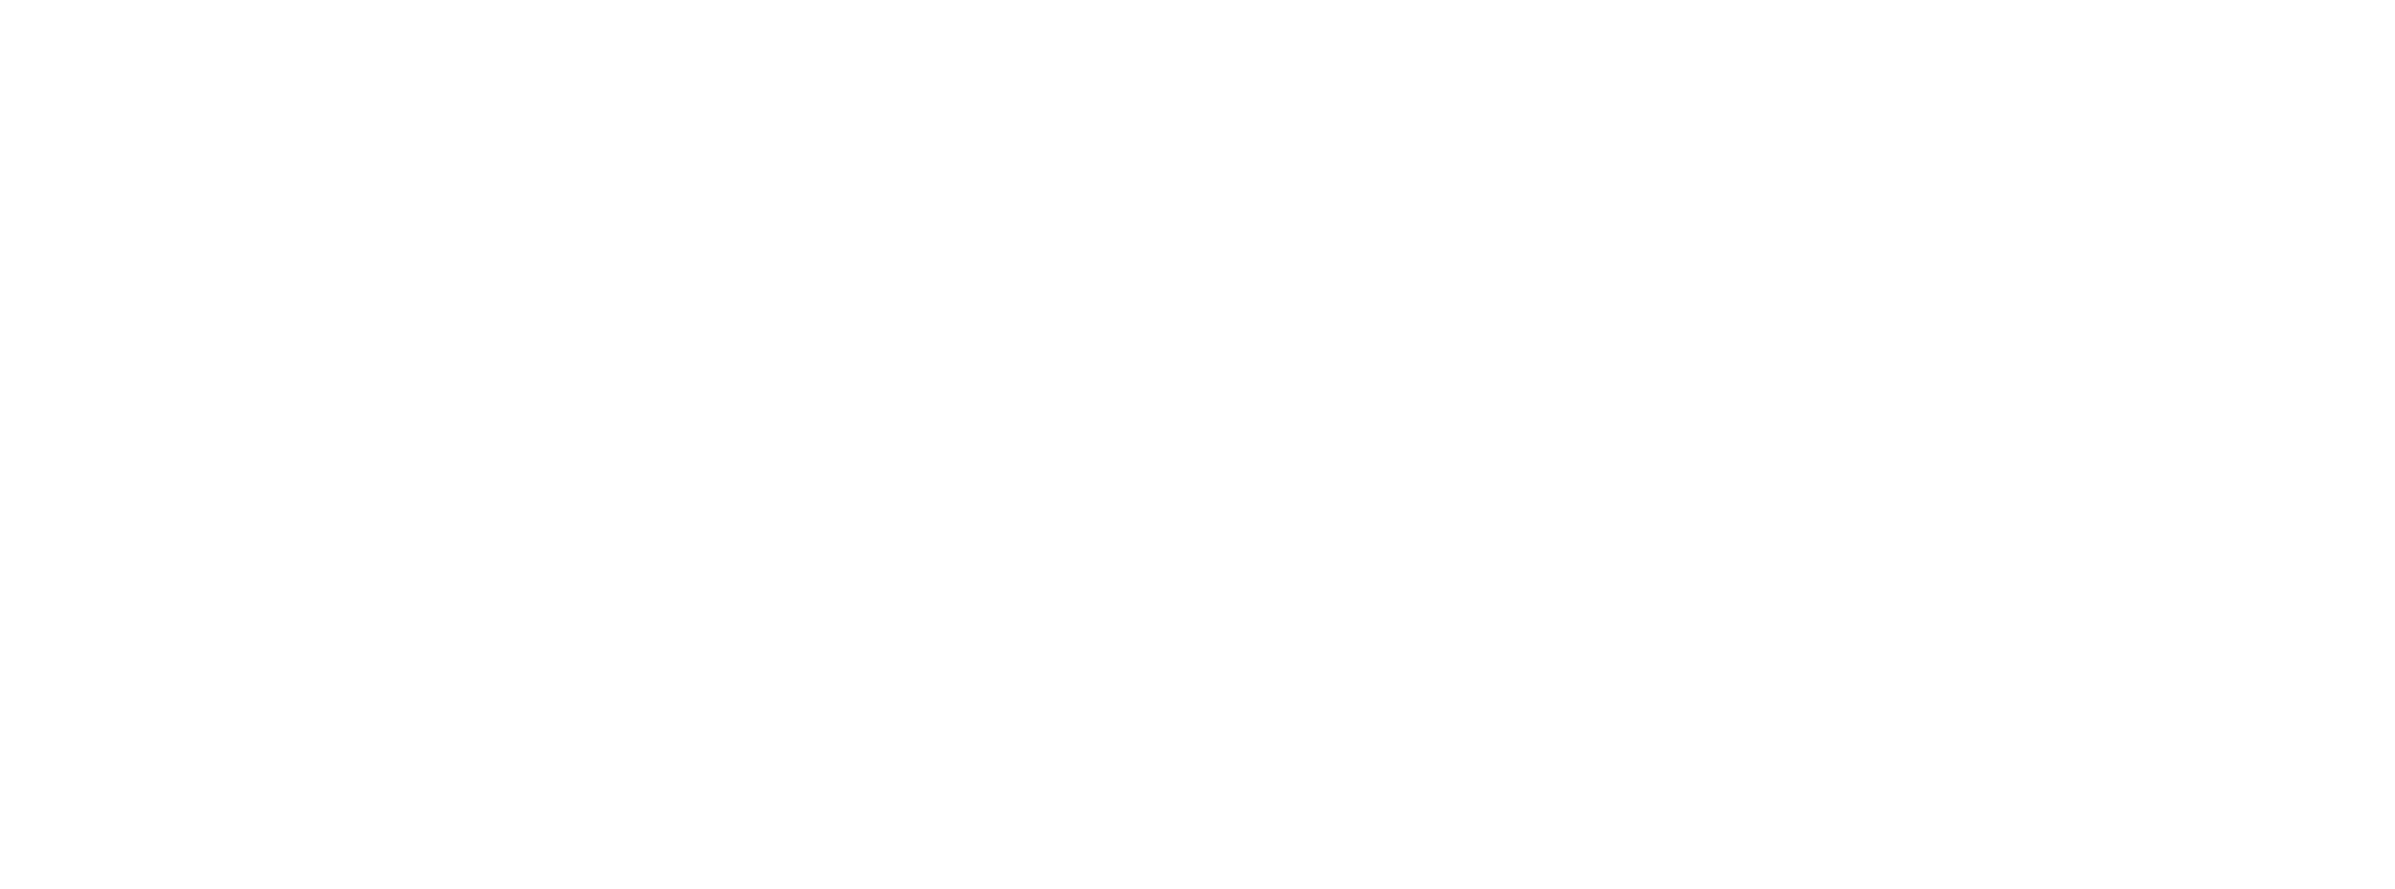 DIVICON-UPLINK-logo-white